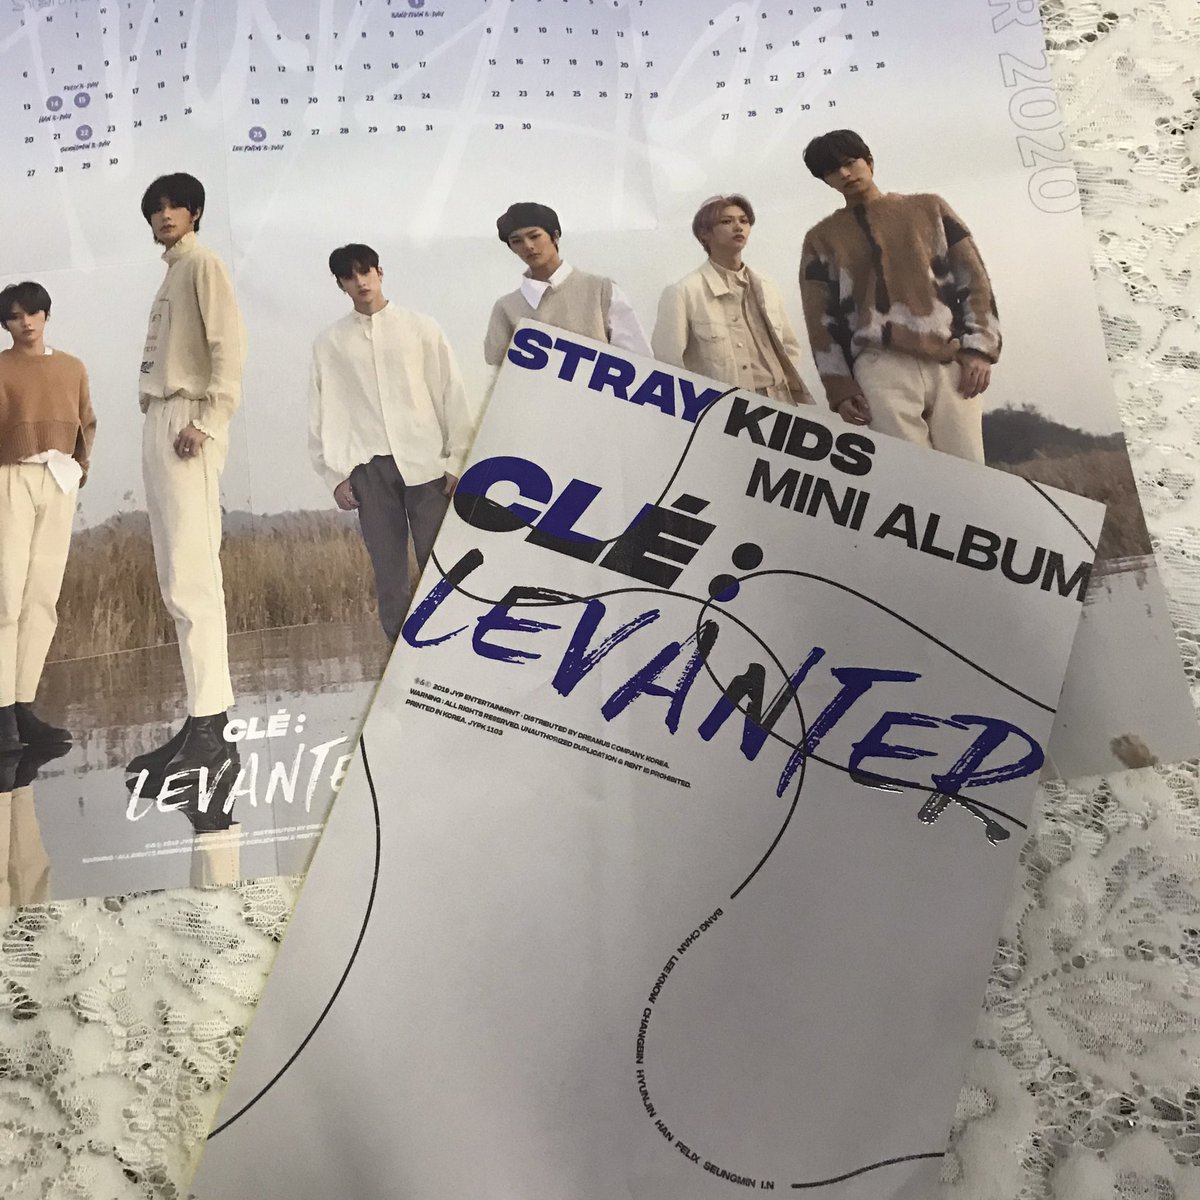 Stray Kids Clé: Levanter Album  no pcs  come with calendar poster  rm25 excl post